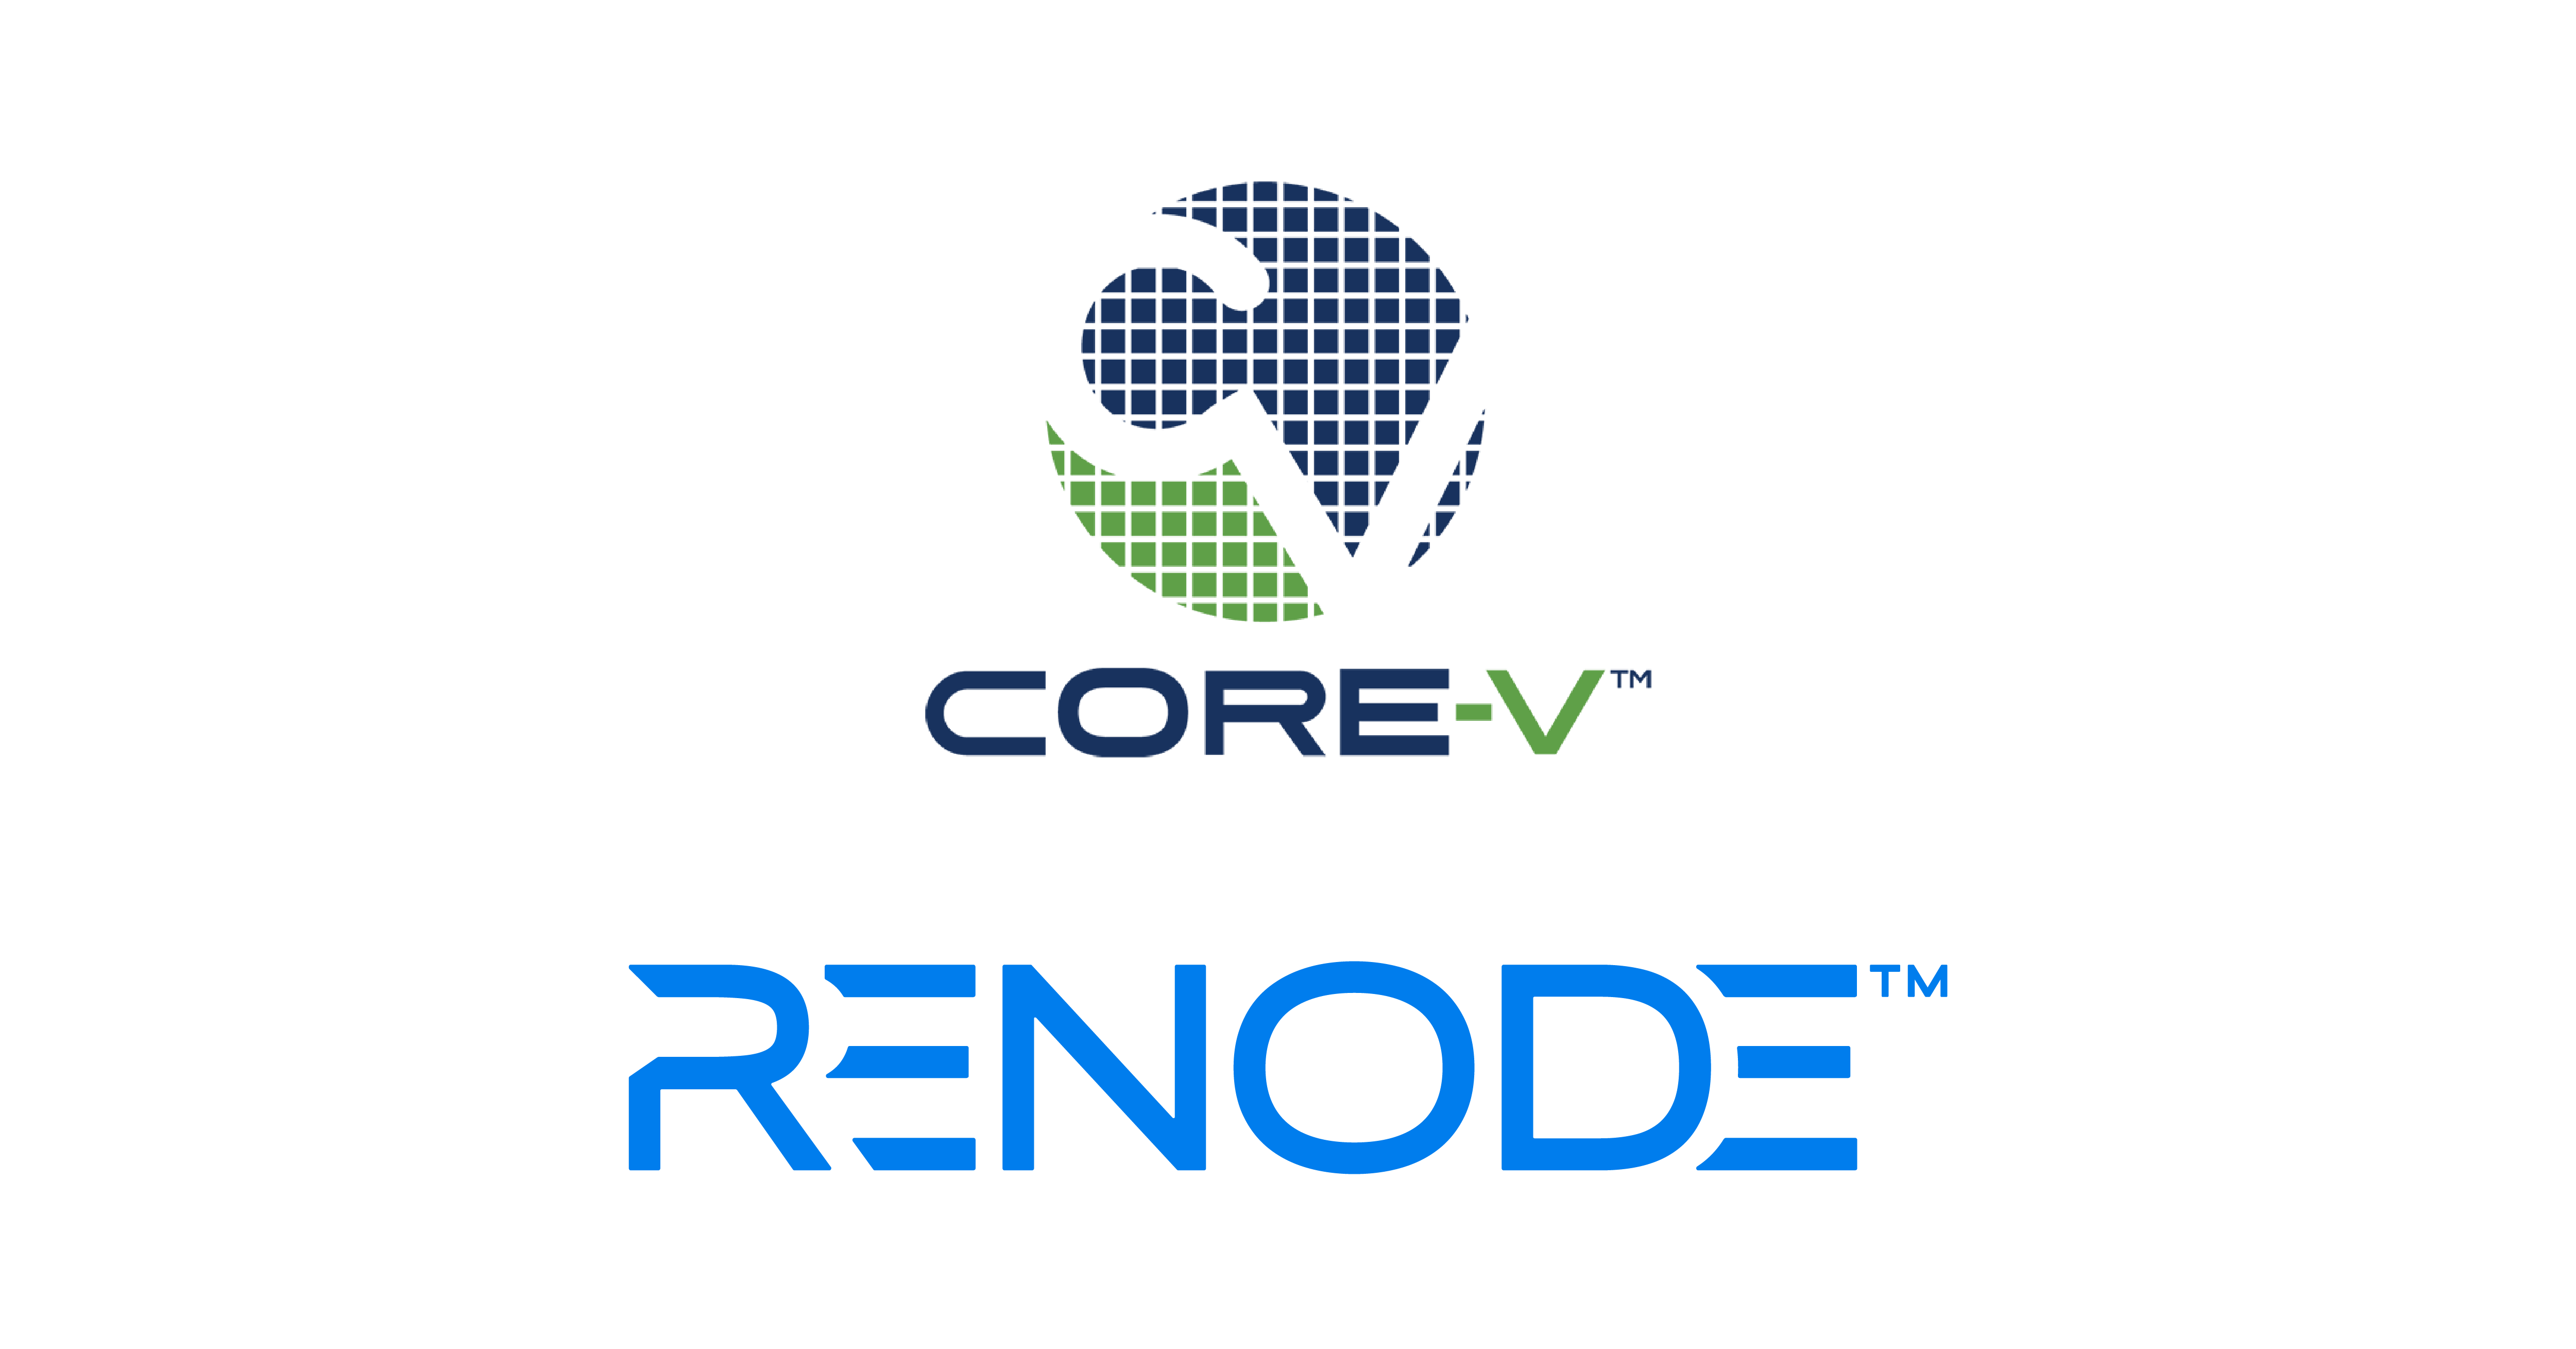 Core-V and Renode